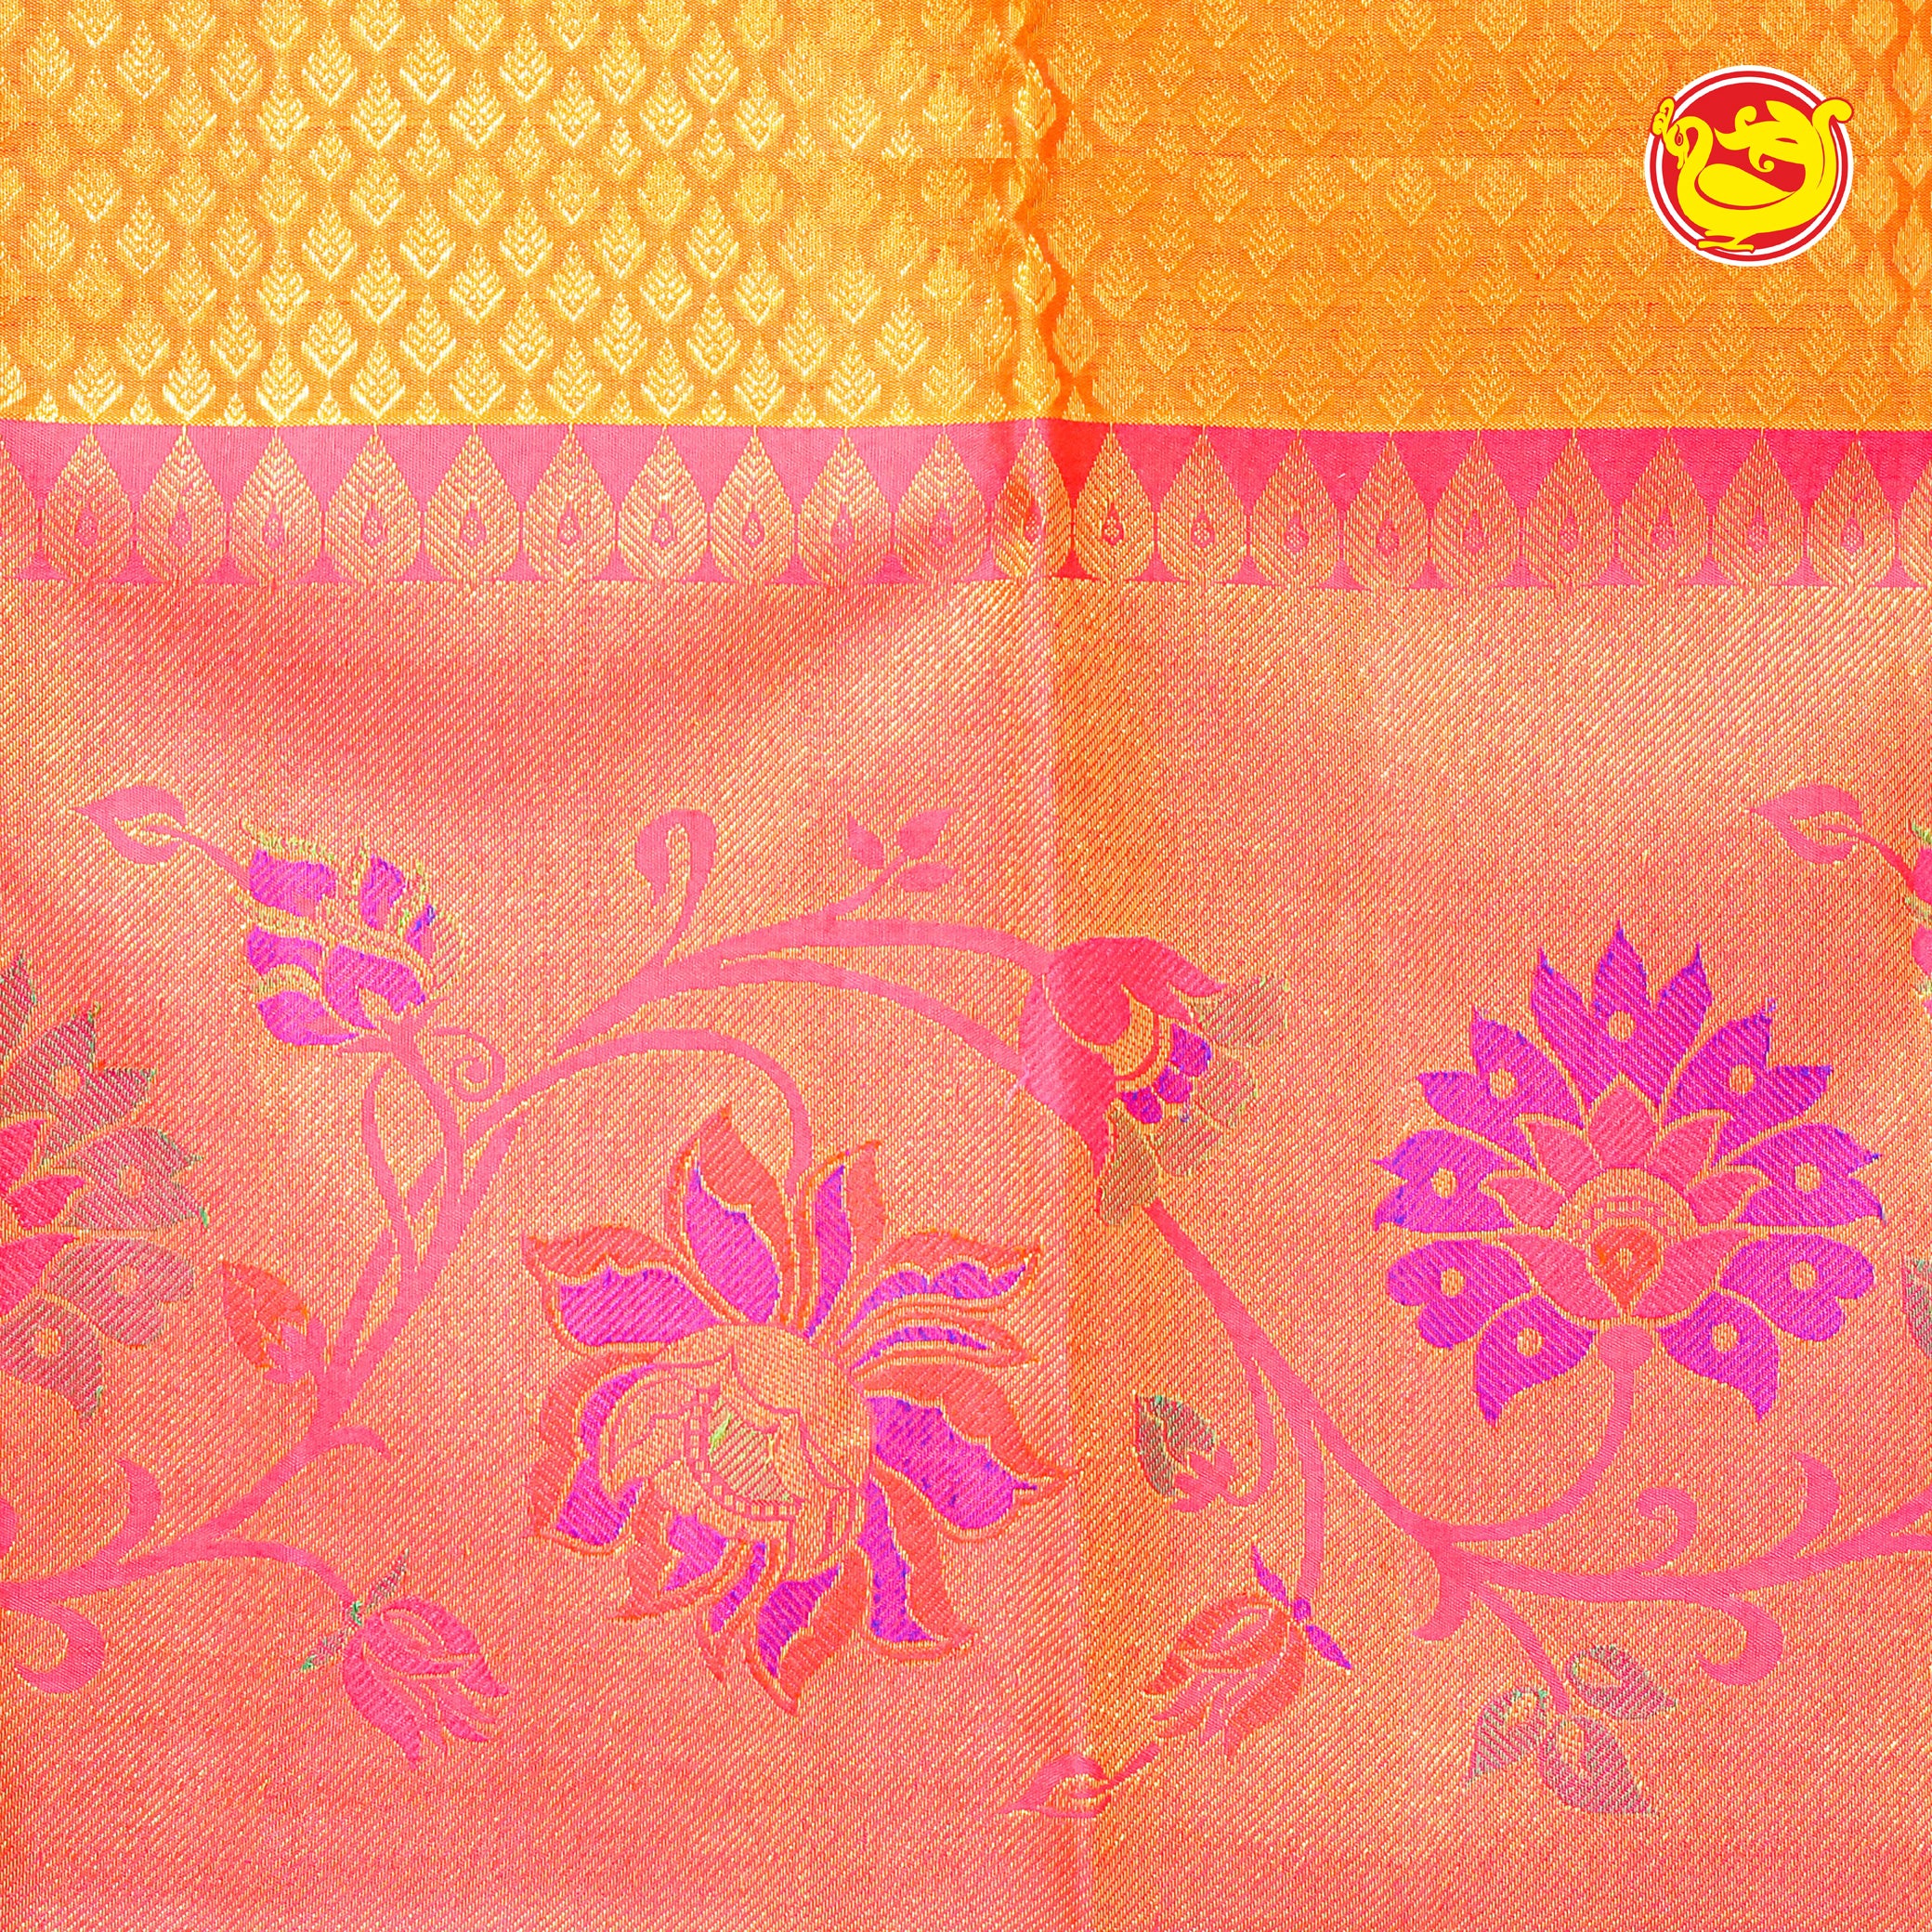 Sunset orange with pink pure Kanchivaram bridal silk saree